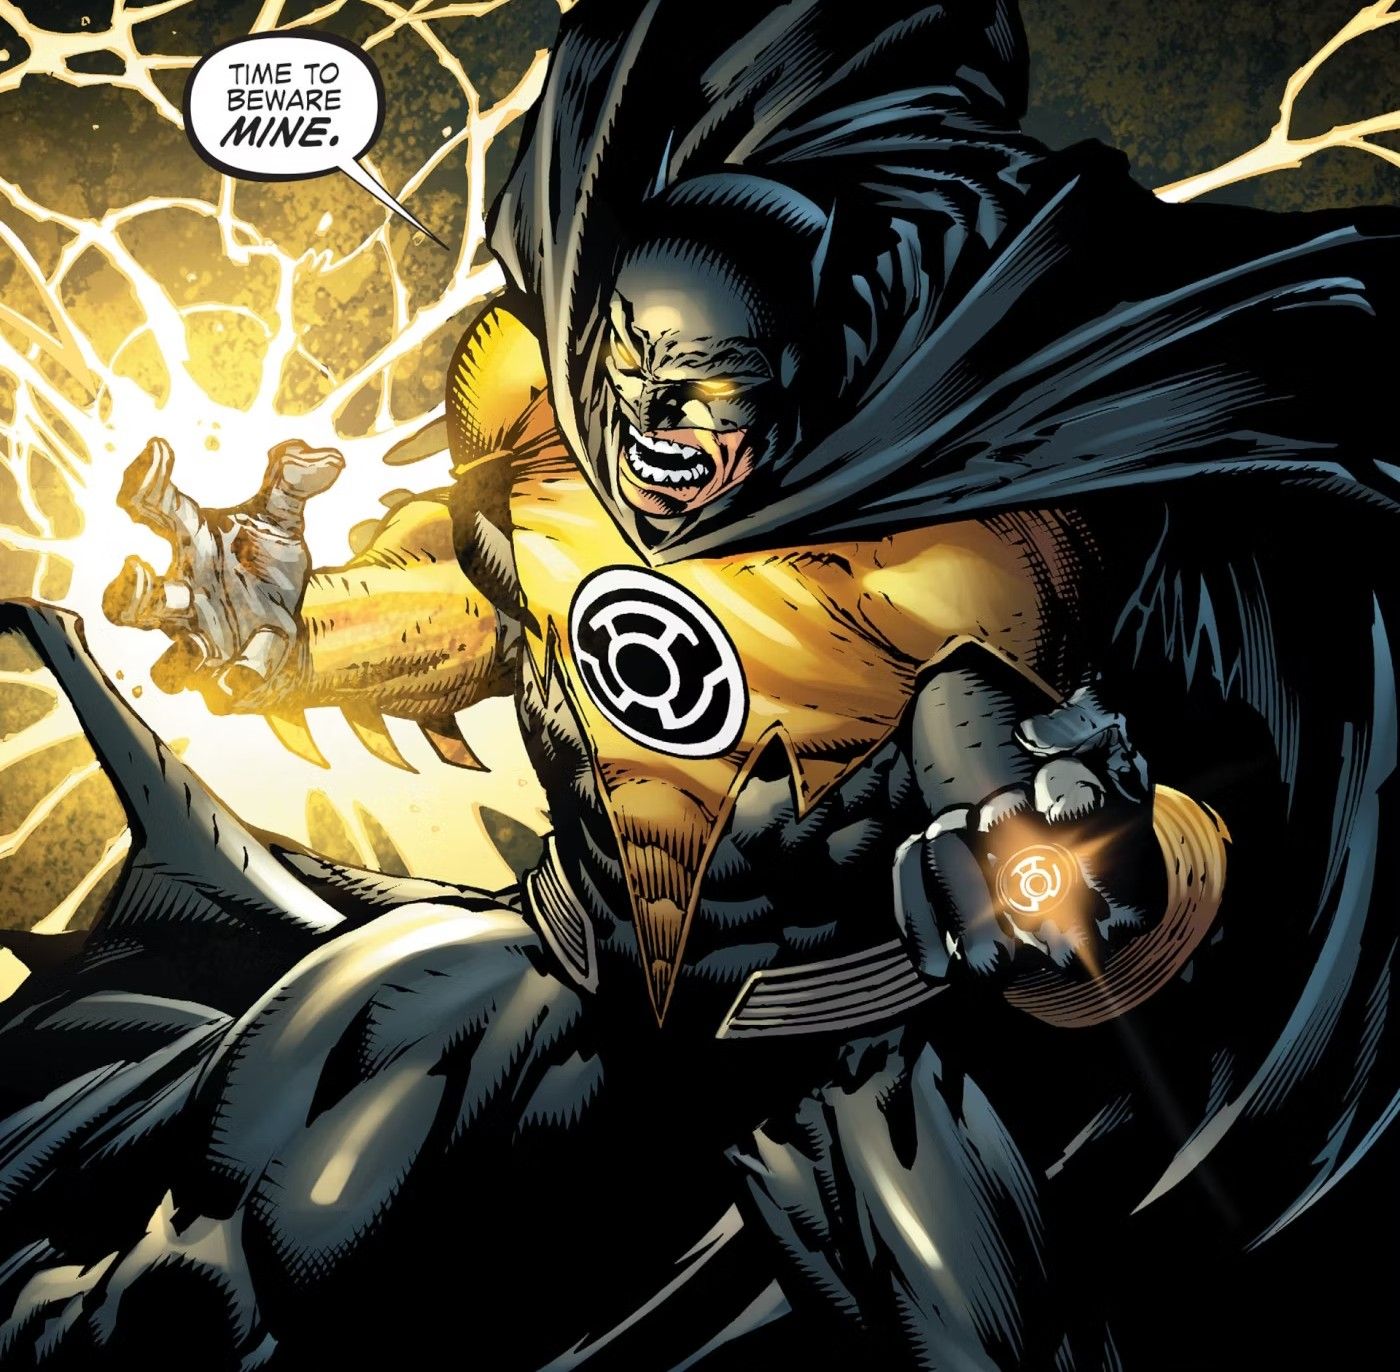 Comic book panel: Batman wearing a yellow lantern suit while a yellow ring glows.